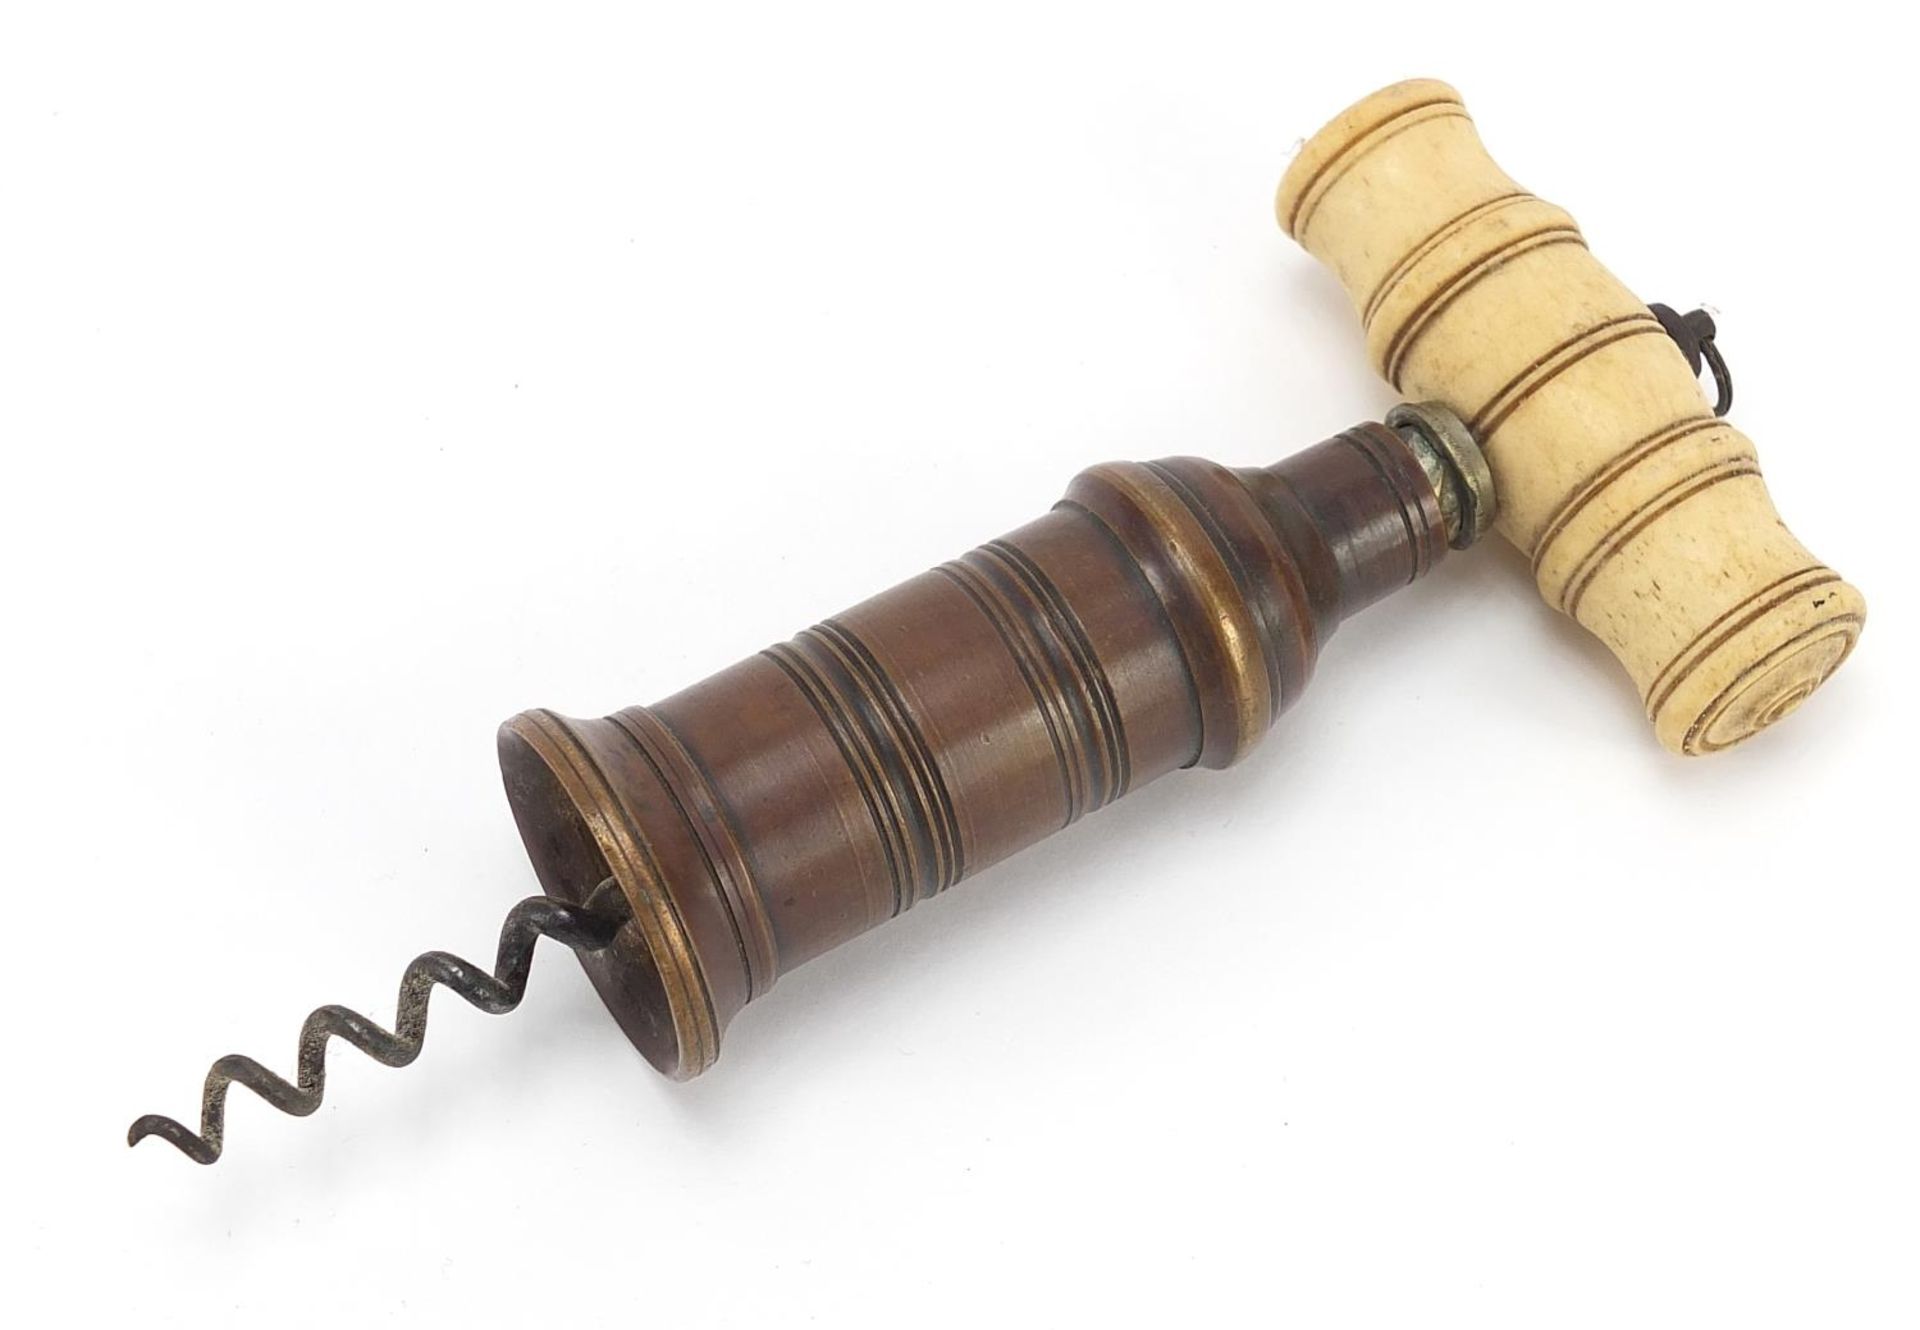 19th century brass corkscrew with bone handle, 18cm in length